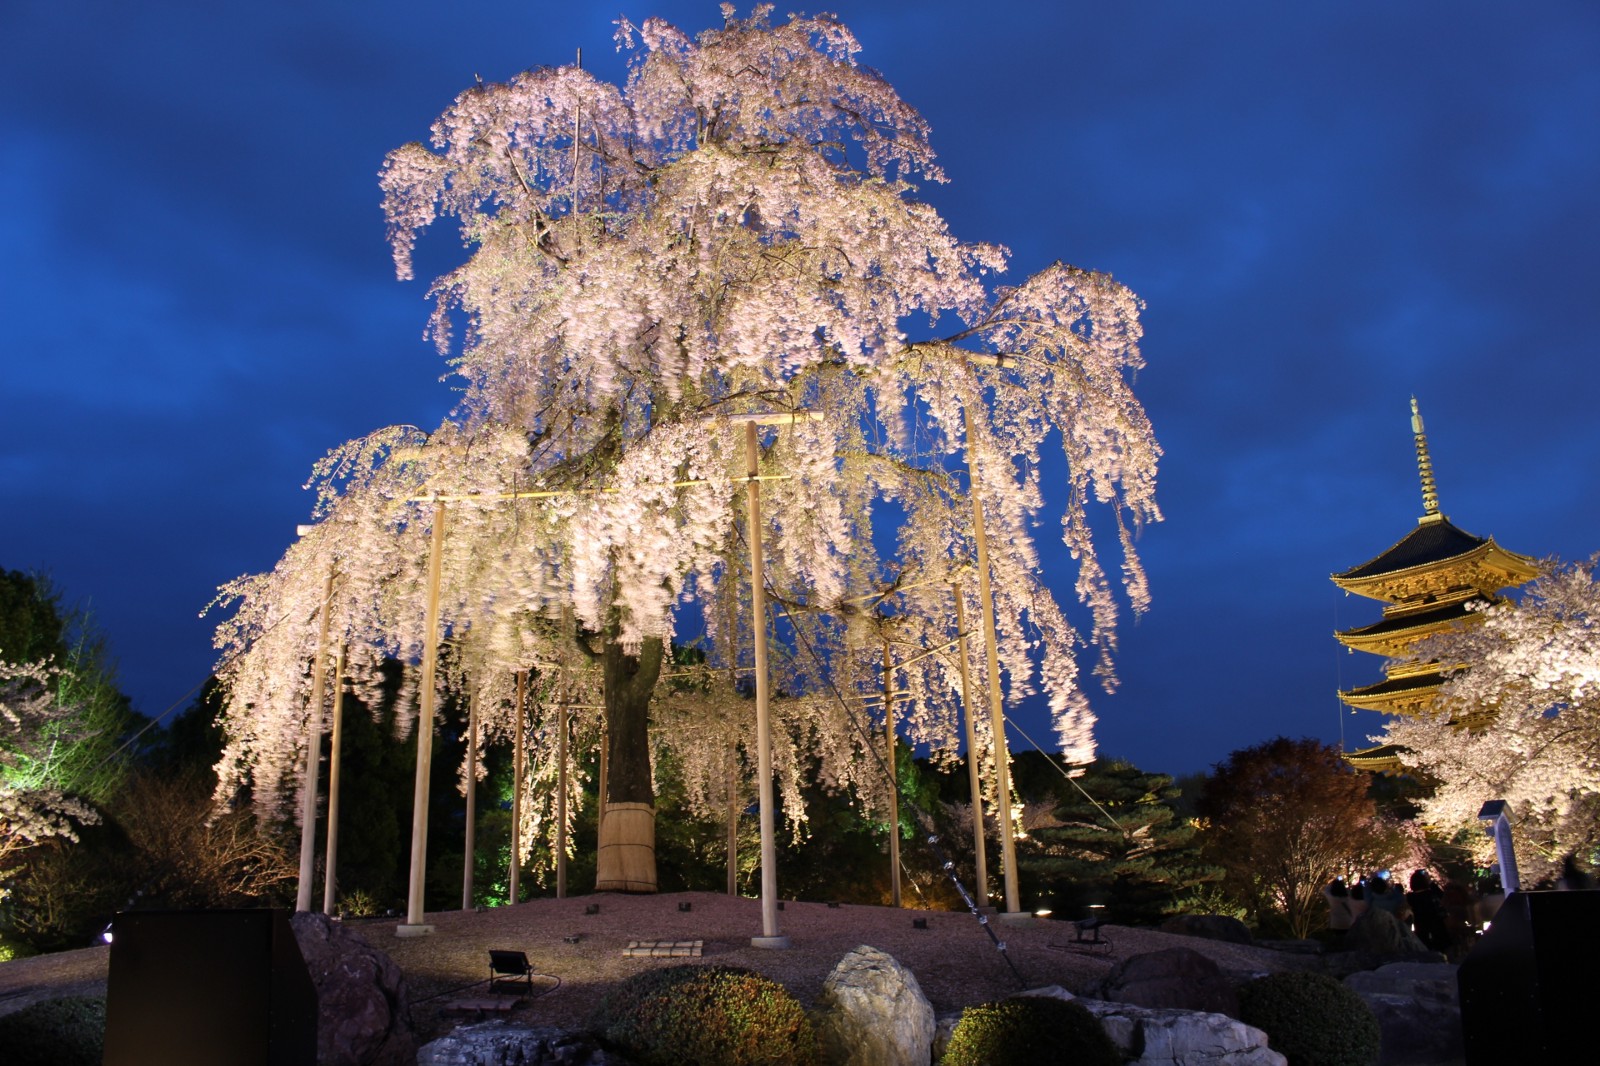 The magnificent cherry tree illuminated at night